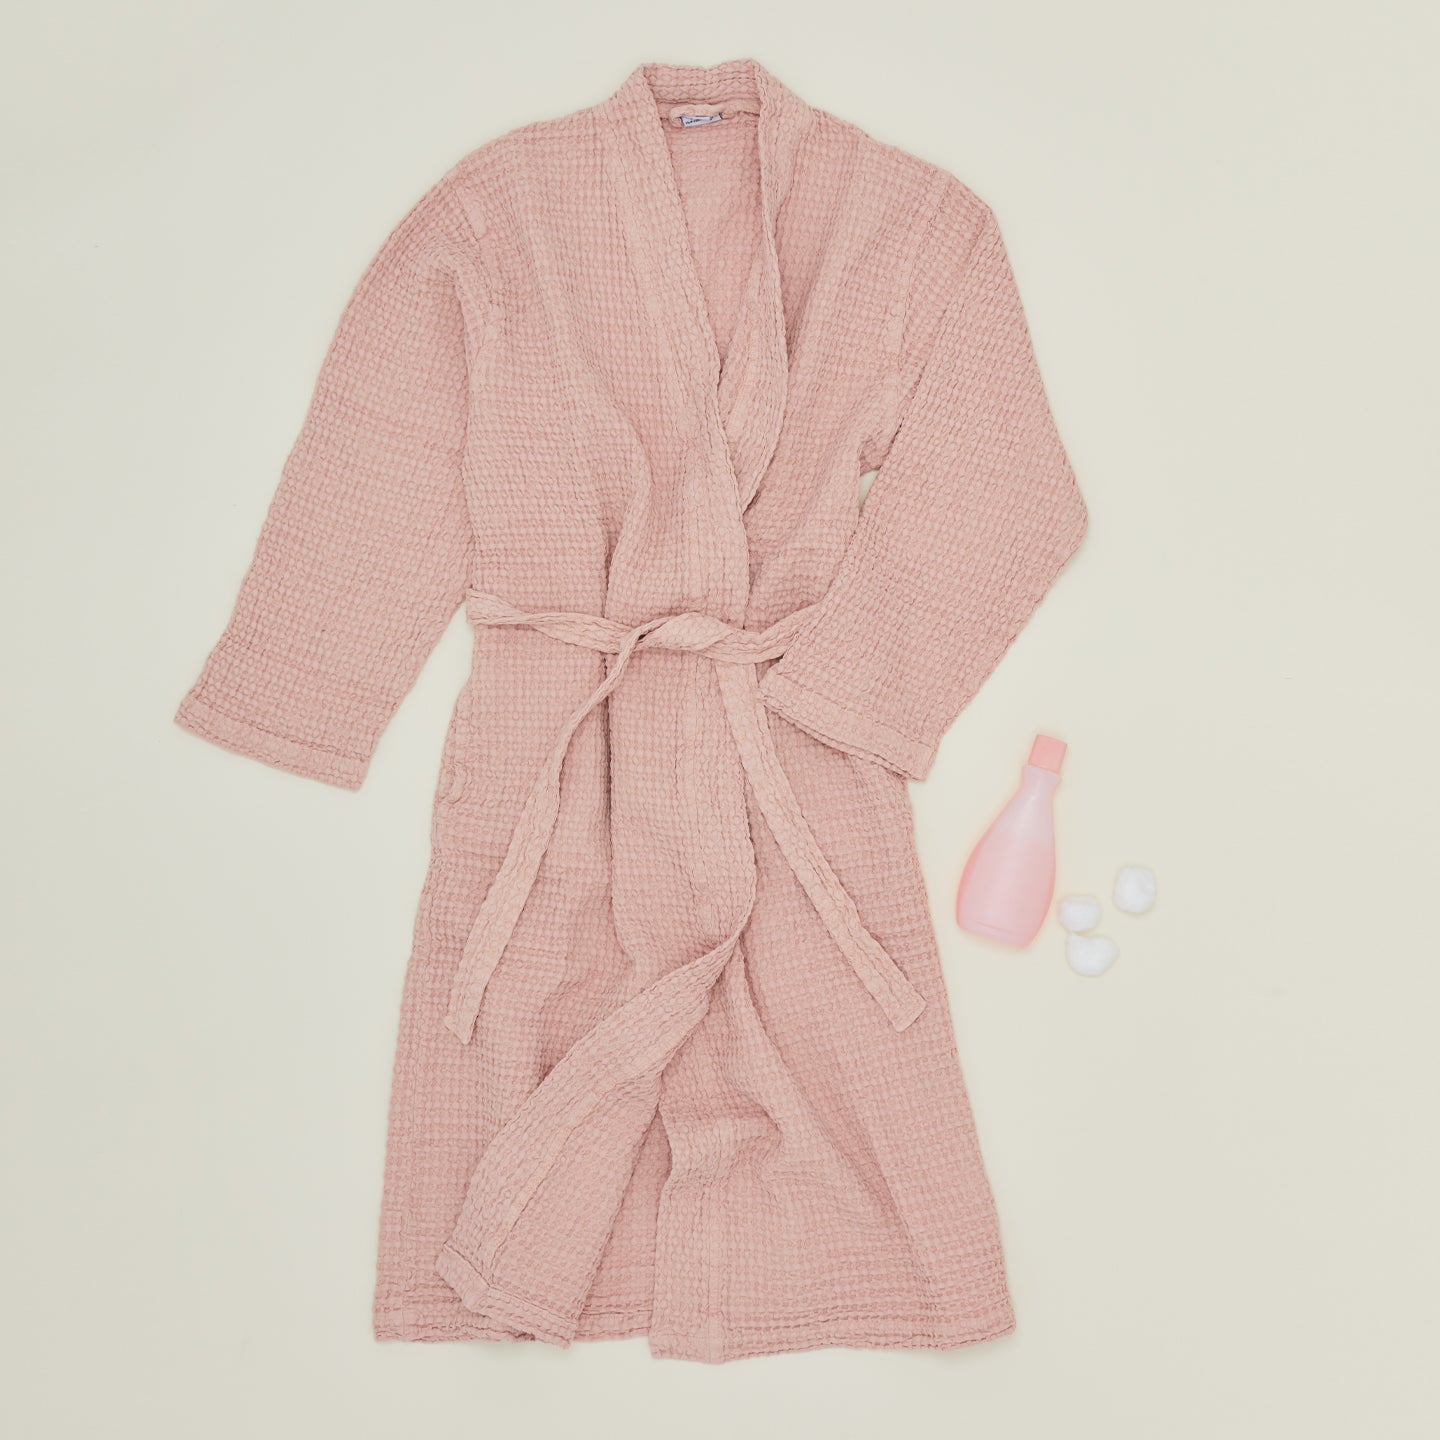 Loungeable bridesmaid taffeta short robes in blush pink | ASOS